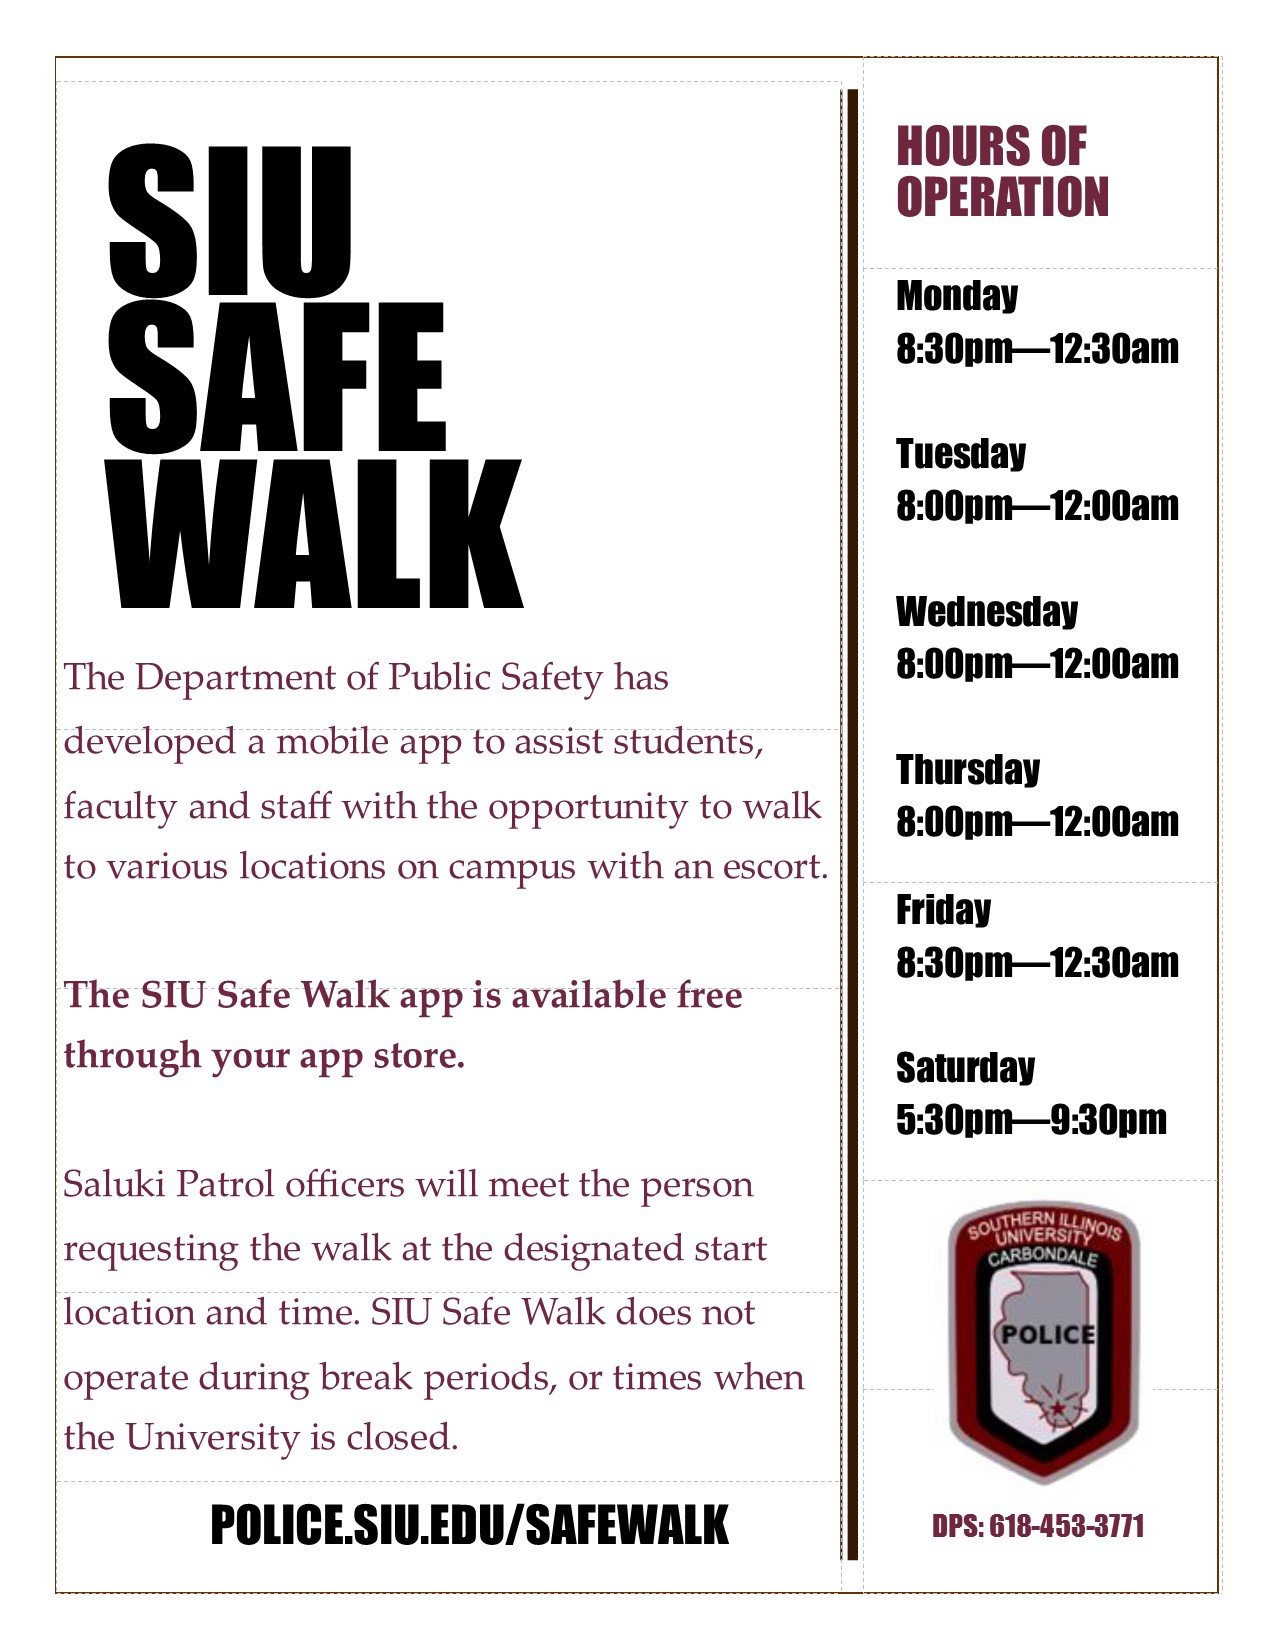 safe walk info